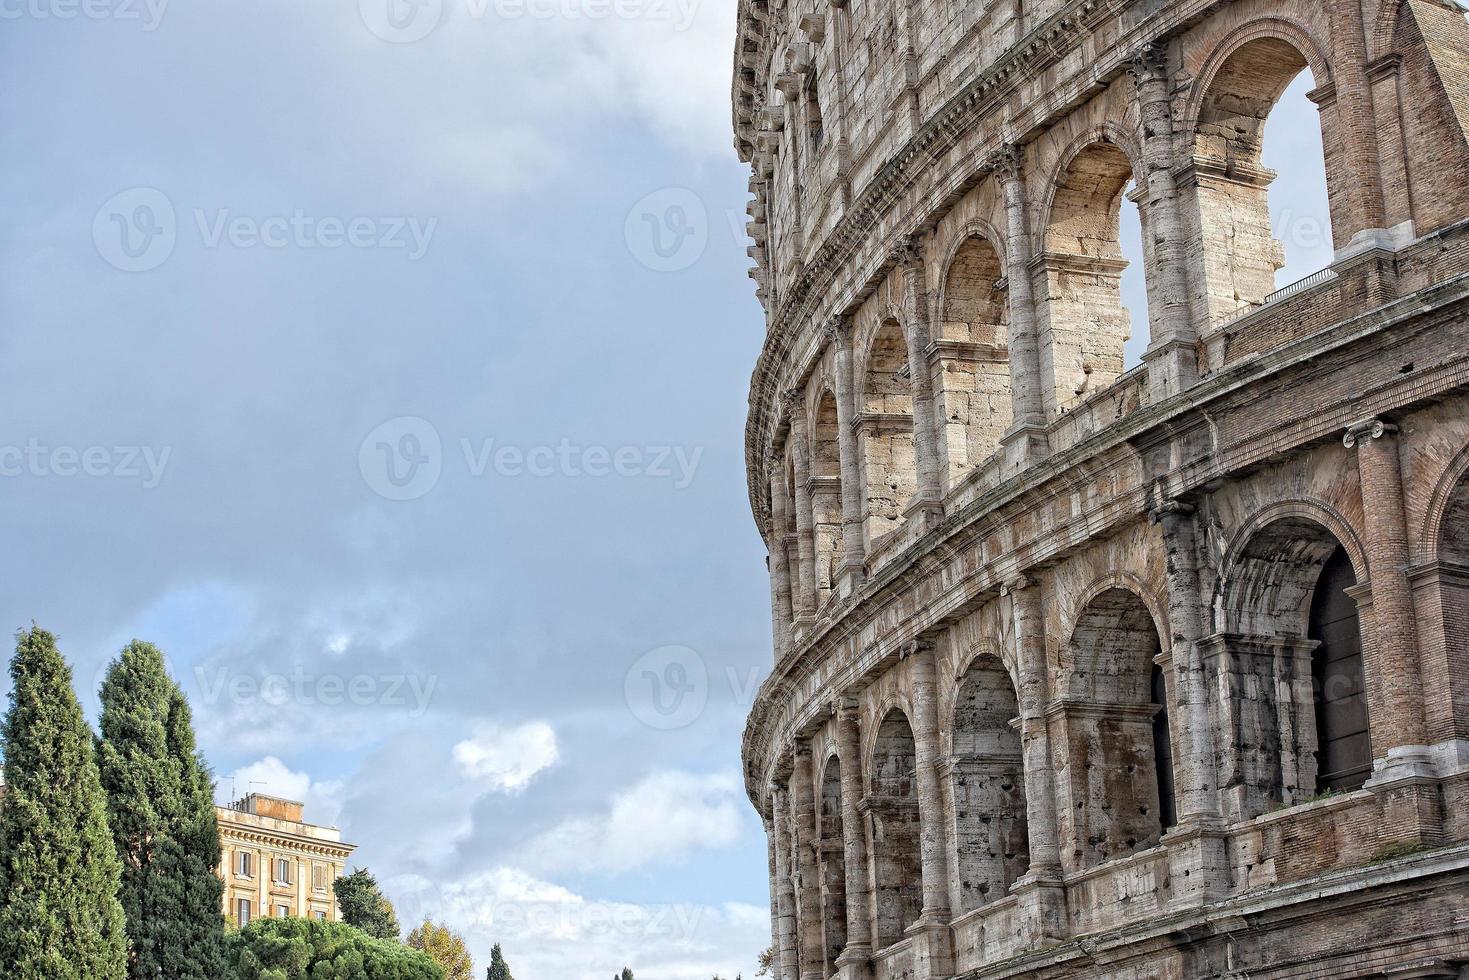 Roma coliseo arcos detalle foto